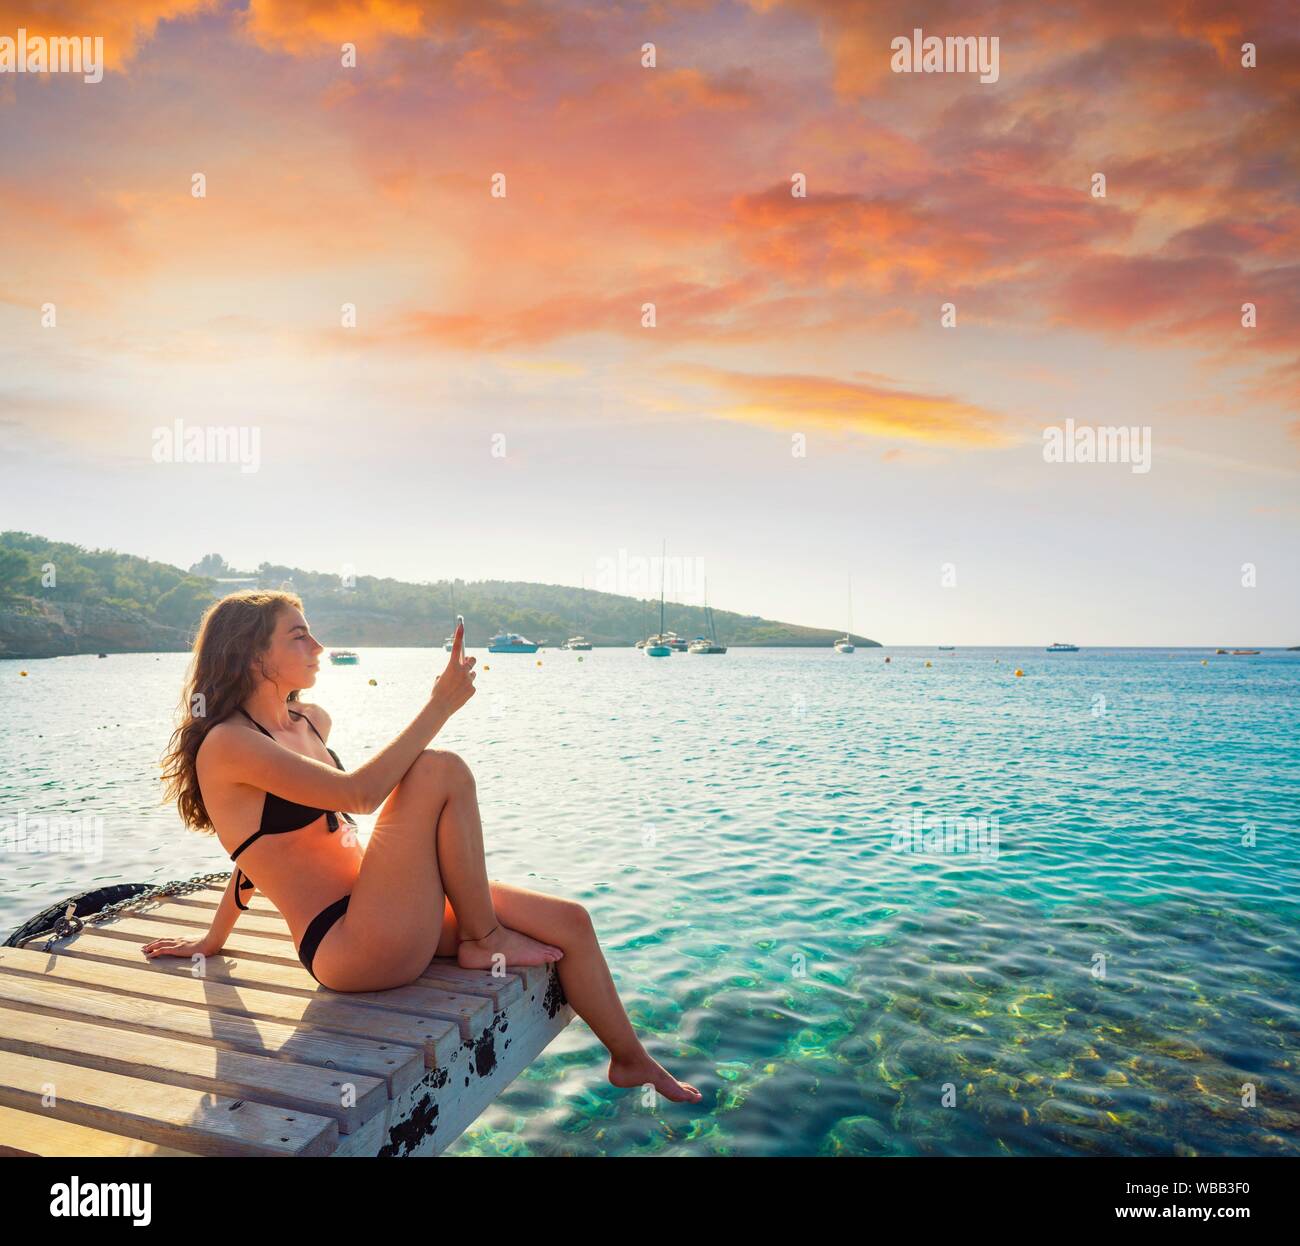 Ibiza girl taking smartphone photos at Portinatx beach pier in Balearic Islands. Stock Photo